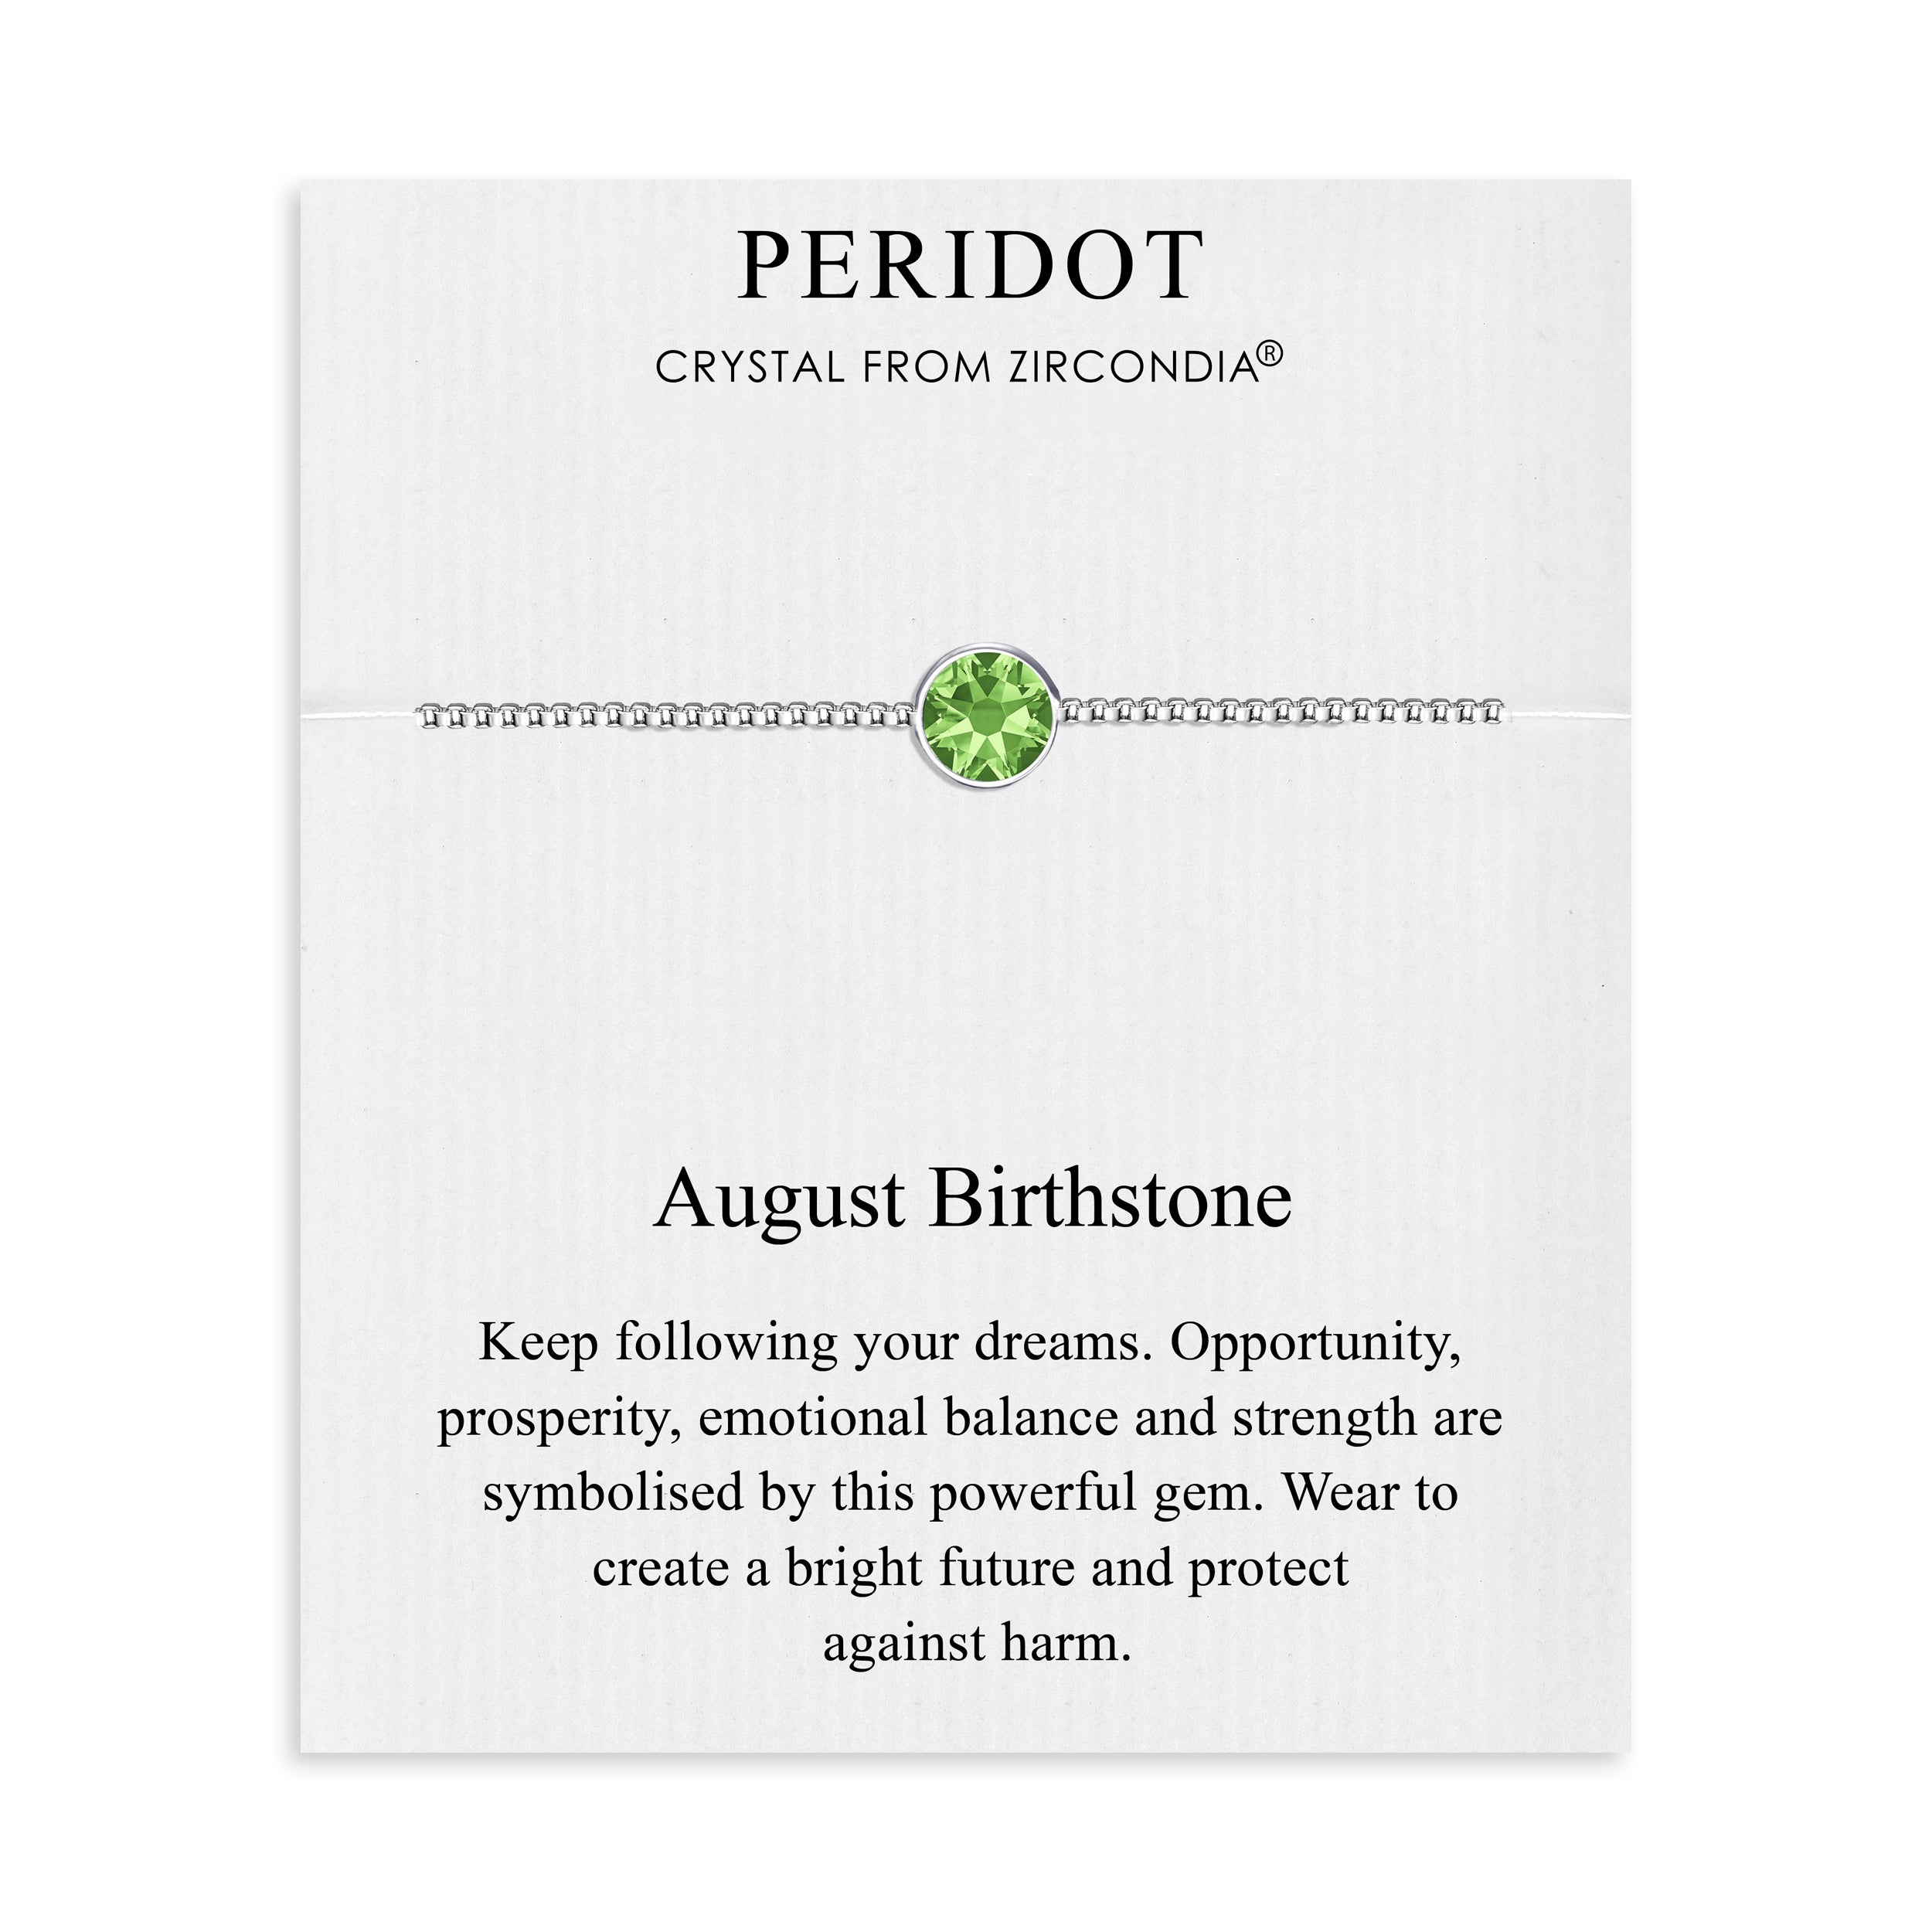 August (Peridot) Birthstone Bracelet Created with Zircondia® Crystals by Philip Jones Jewellery